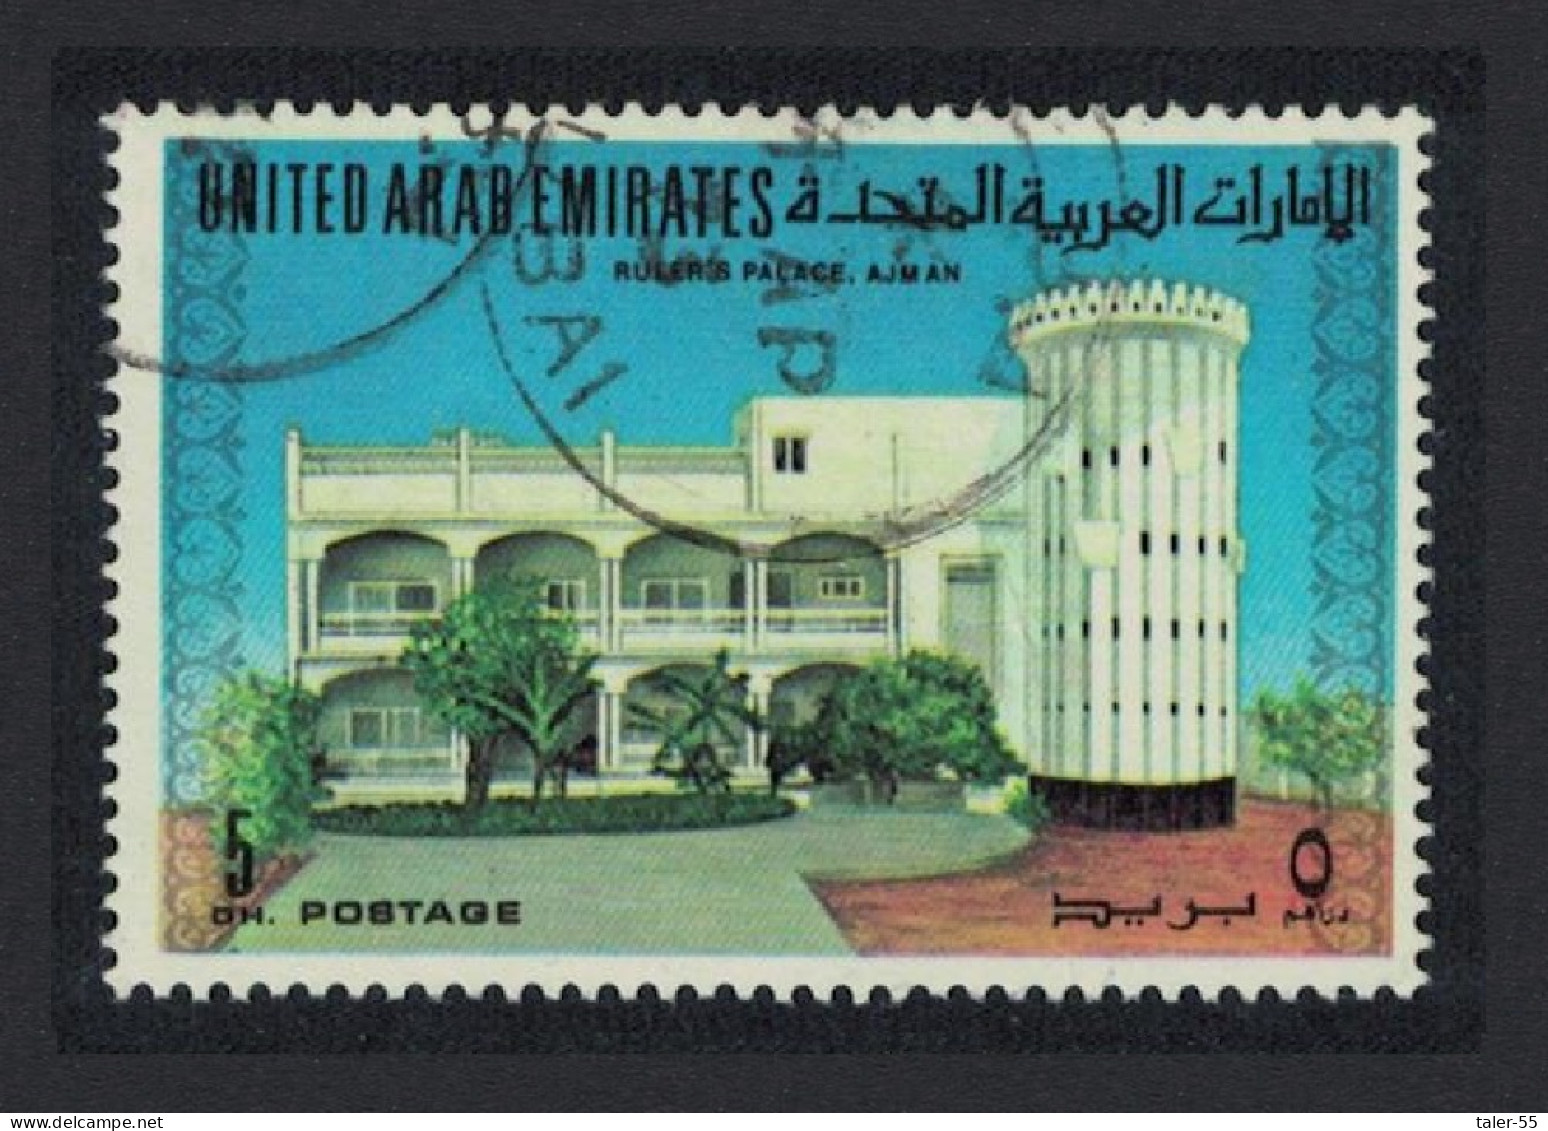 United Arab Emirates Ruler's Palace Ajman 5 Dh 1973 MNH SG#11 MI#11 - United Arab Emirates (General)